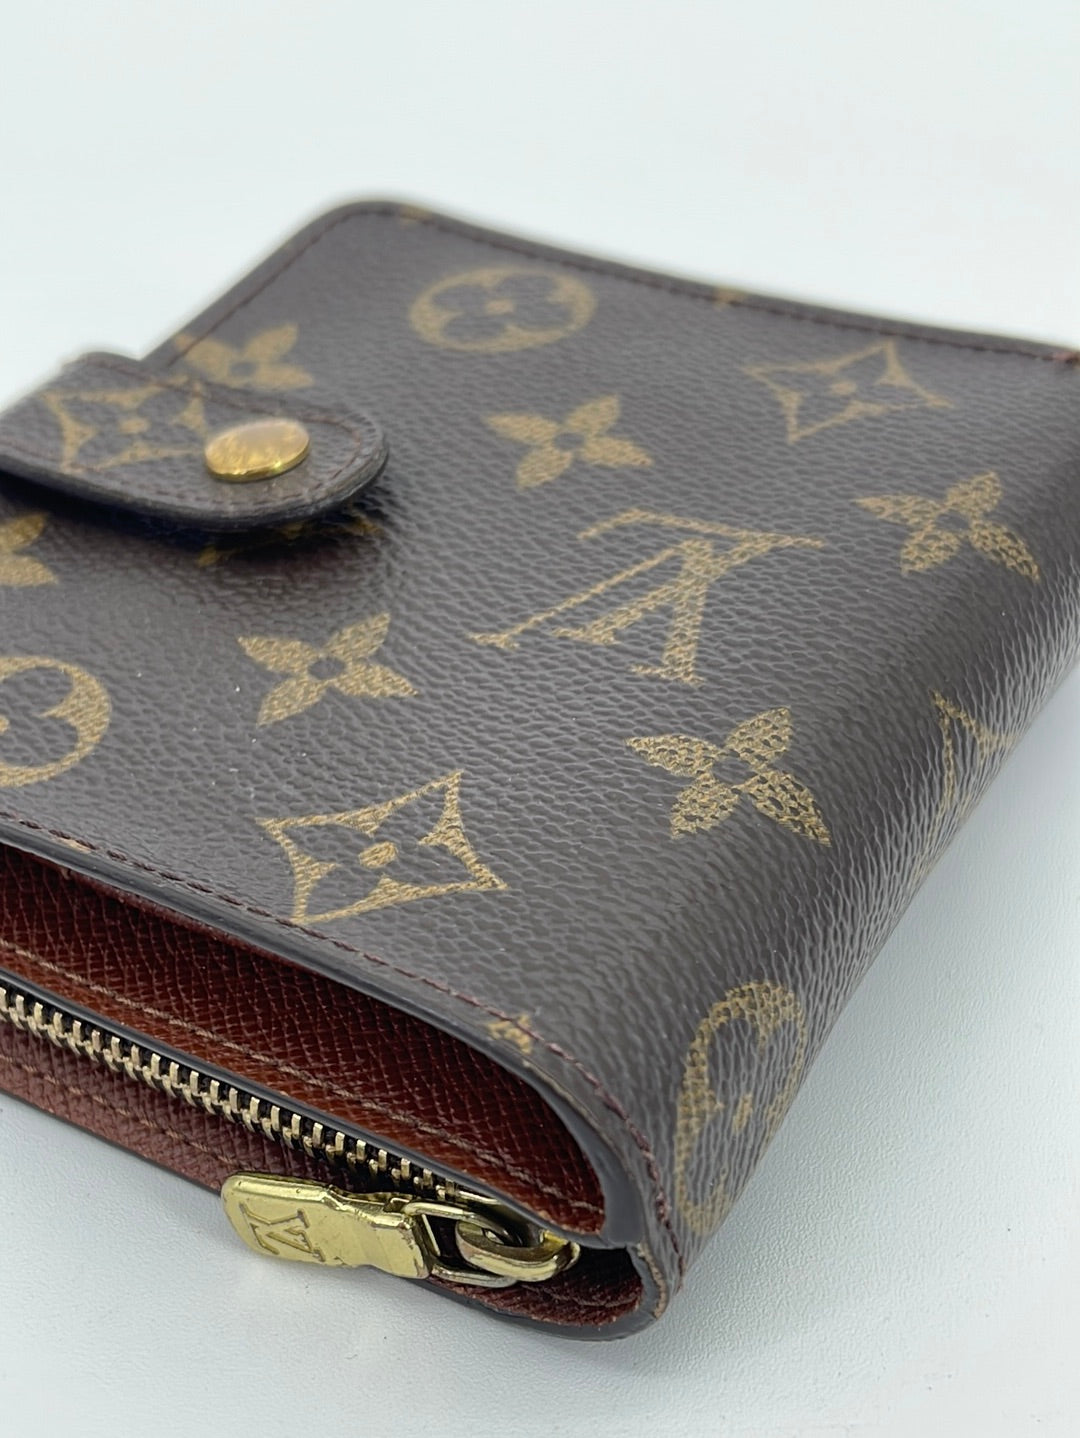 Louis Vuitton Compact Double V Wallet - LVLENKA Luxury Consignment